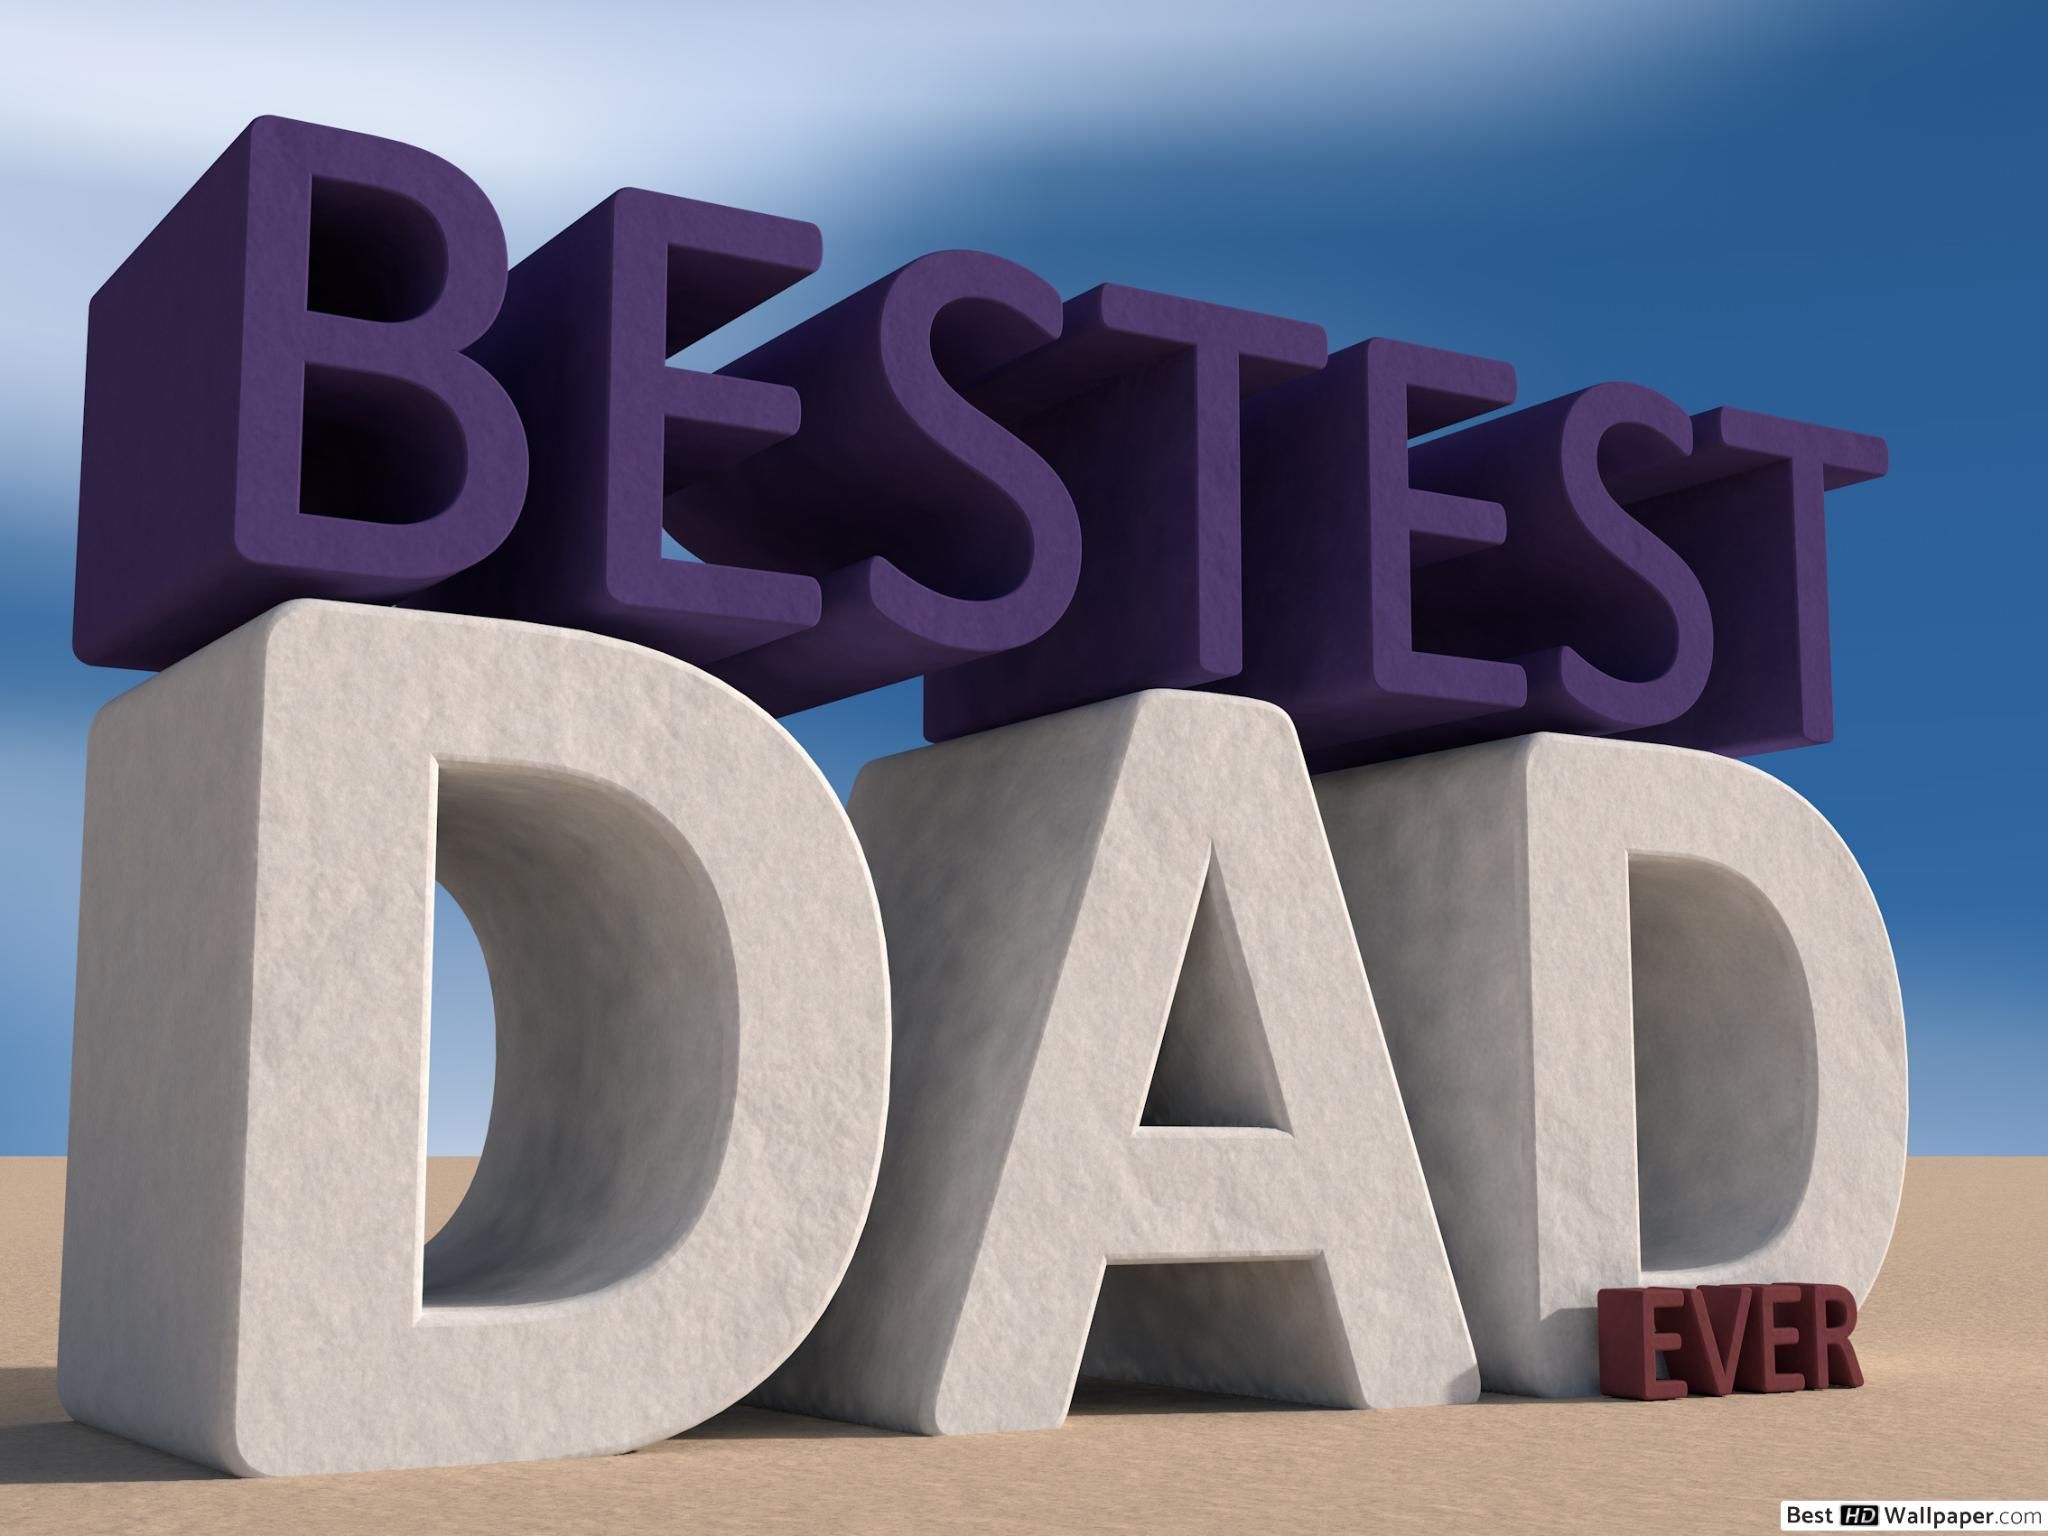 Bestest DAD Ever HD wallpaper download